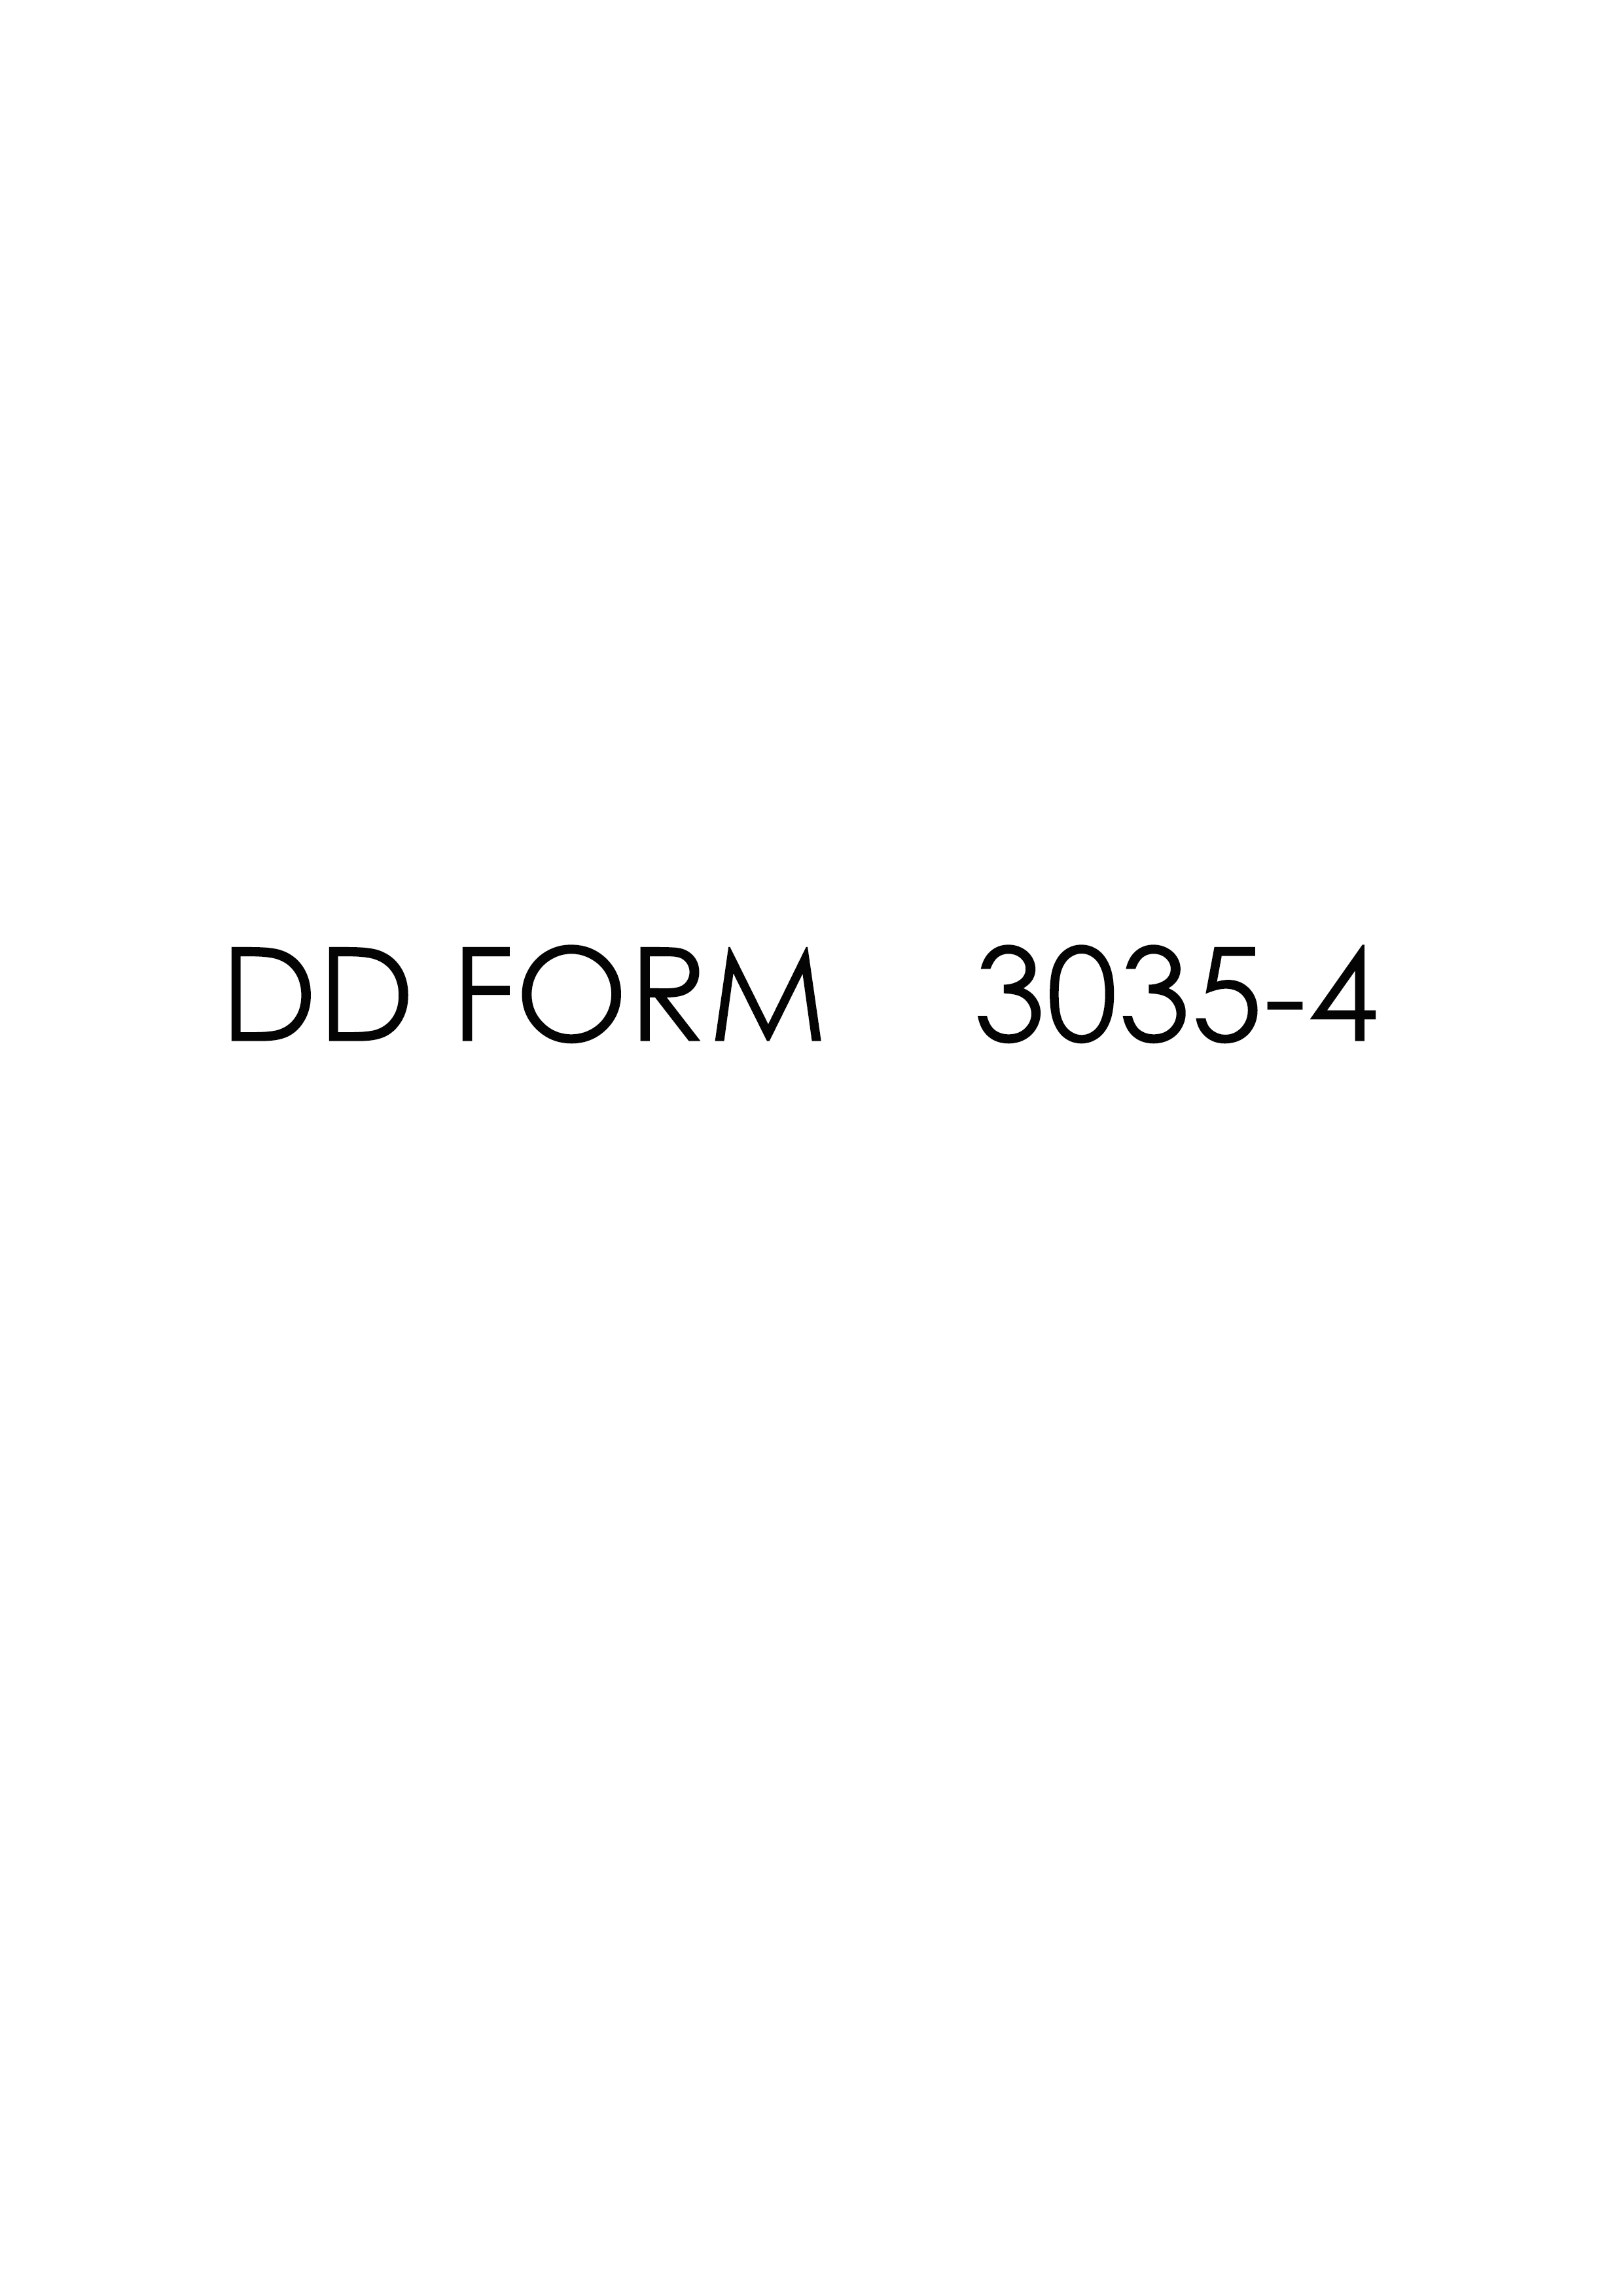 Download dd form 3035-4